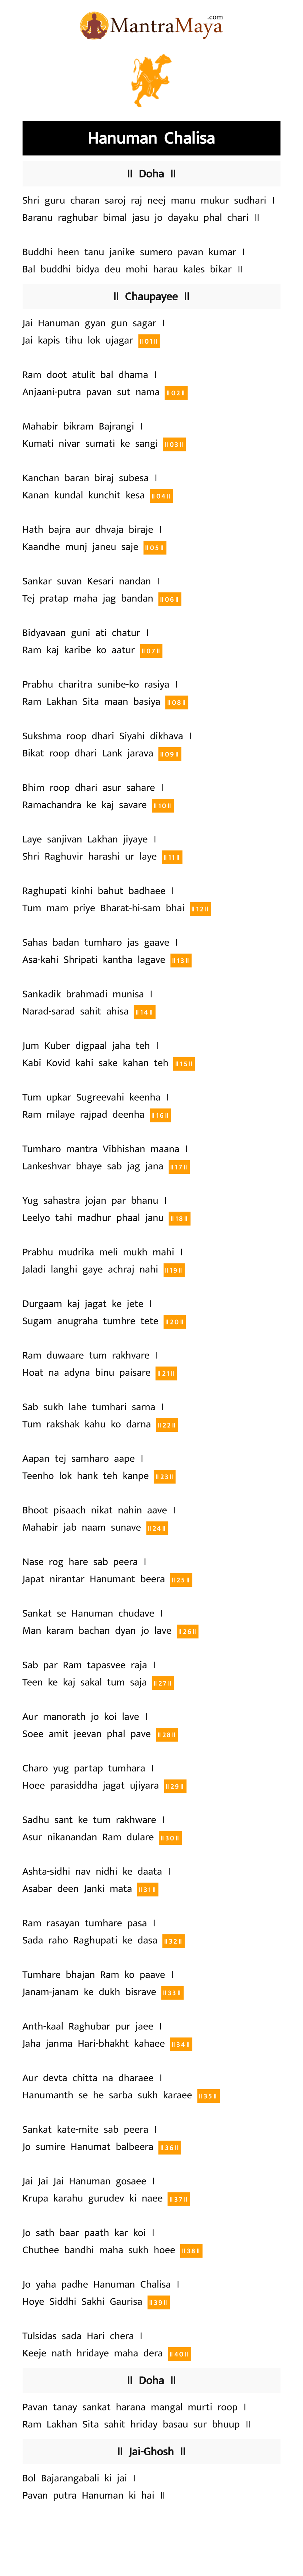 Hanuman Chalisa English Lyrics Text Pdf Image Audio Video - Mantramayacom